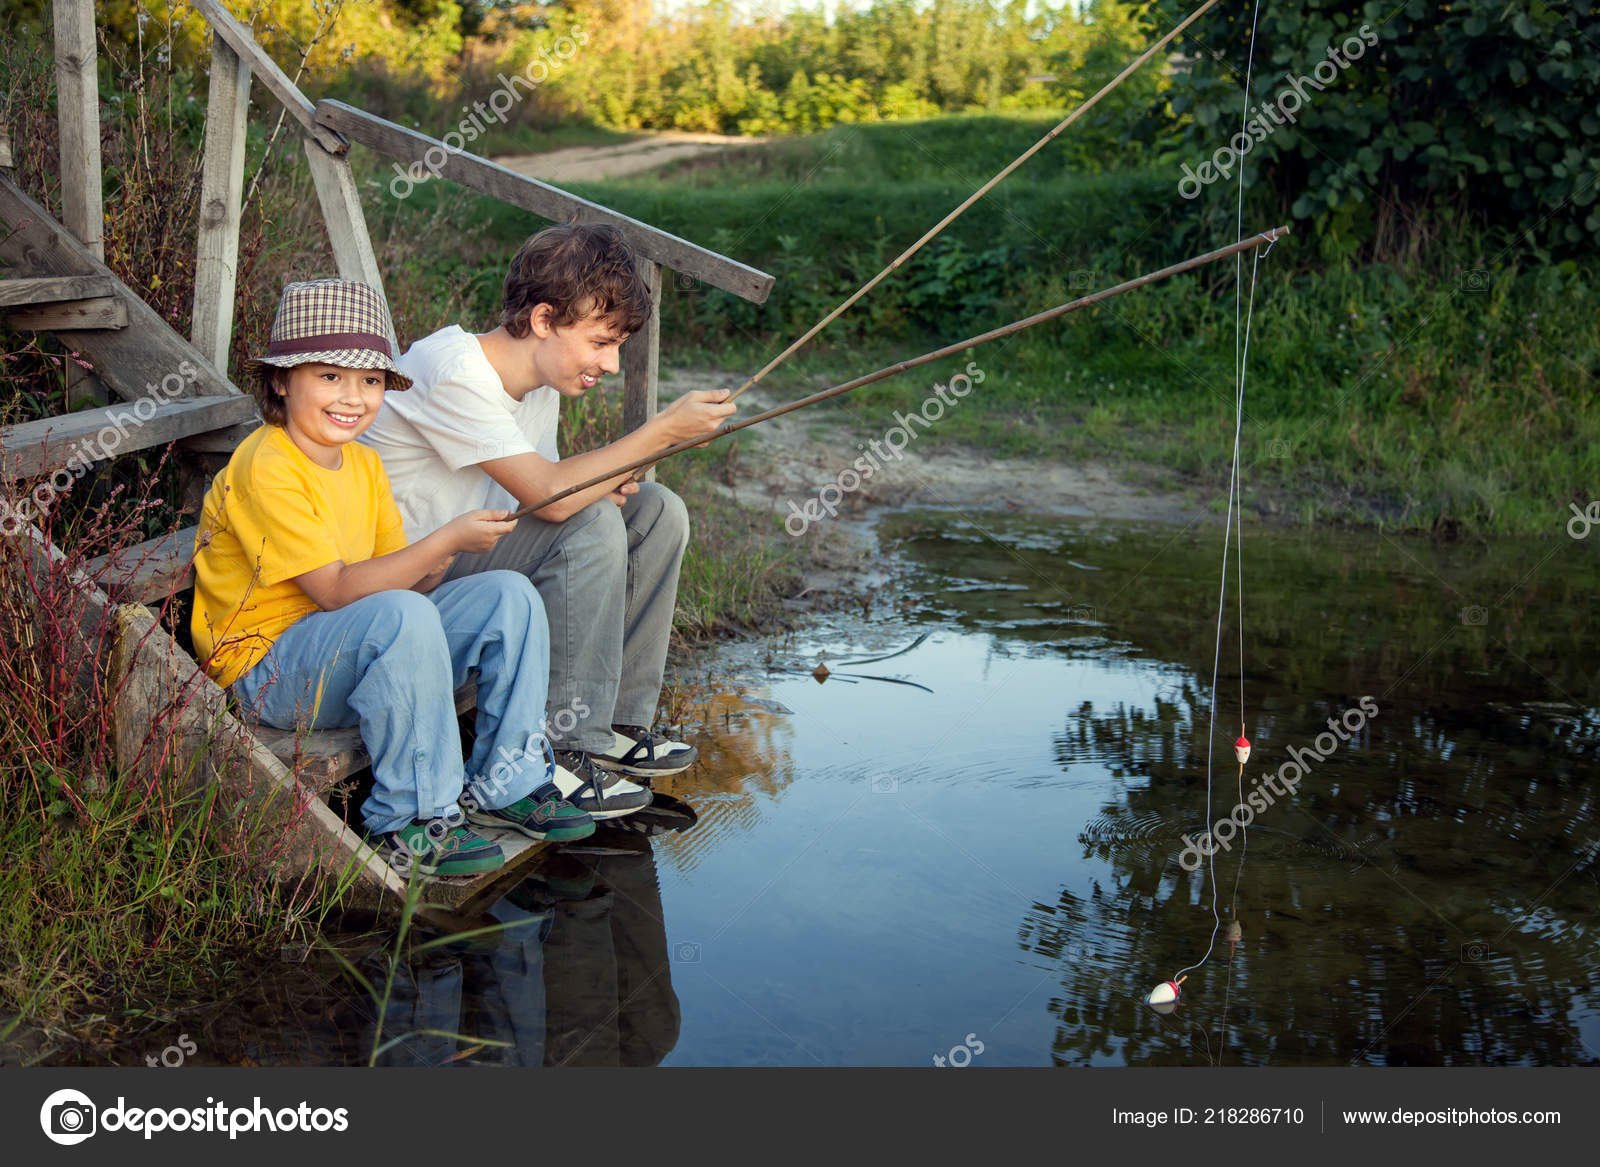 https://st4.depositphotos.com/1067336/21828/i/1600/depositphotos_218286710-stock-photo-happy-boys-fishing-river-two.jpg